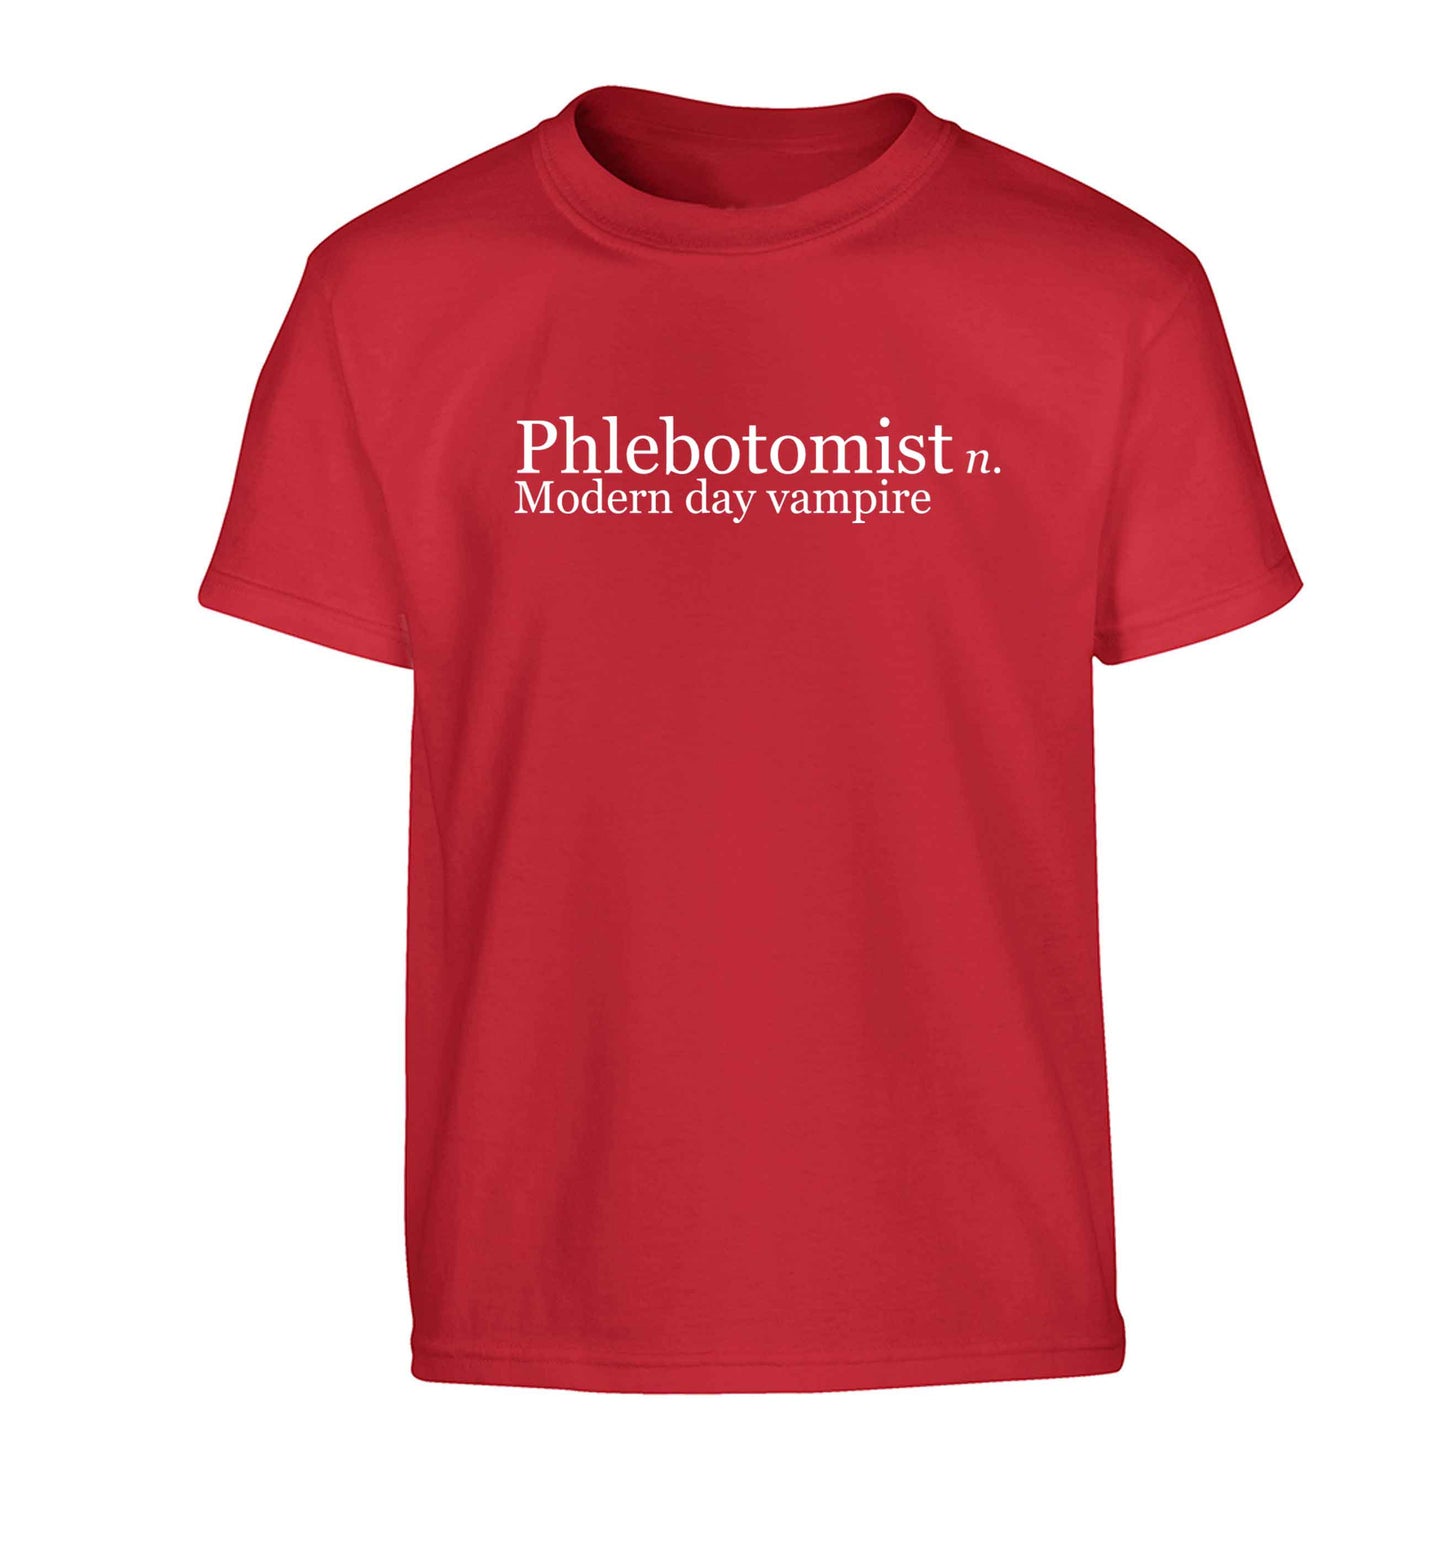 Phlebotomist - Modern day vampire Children's red Tshirt 12-13 Years